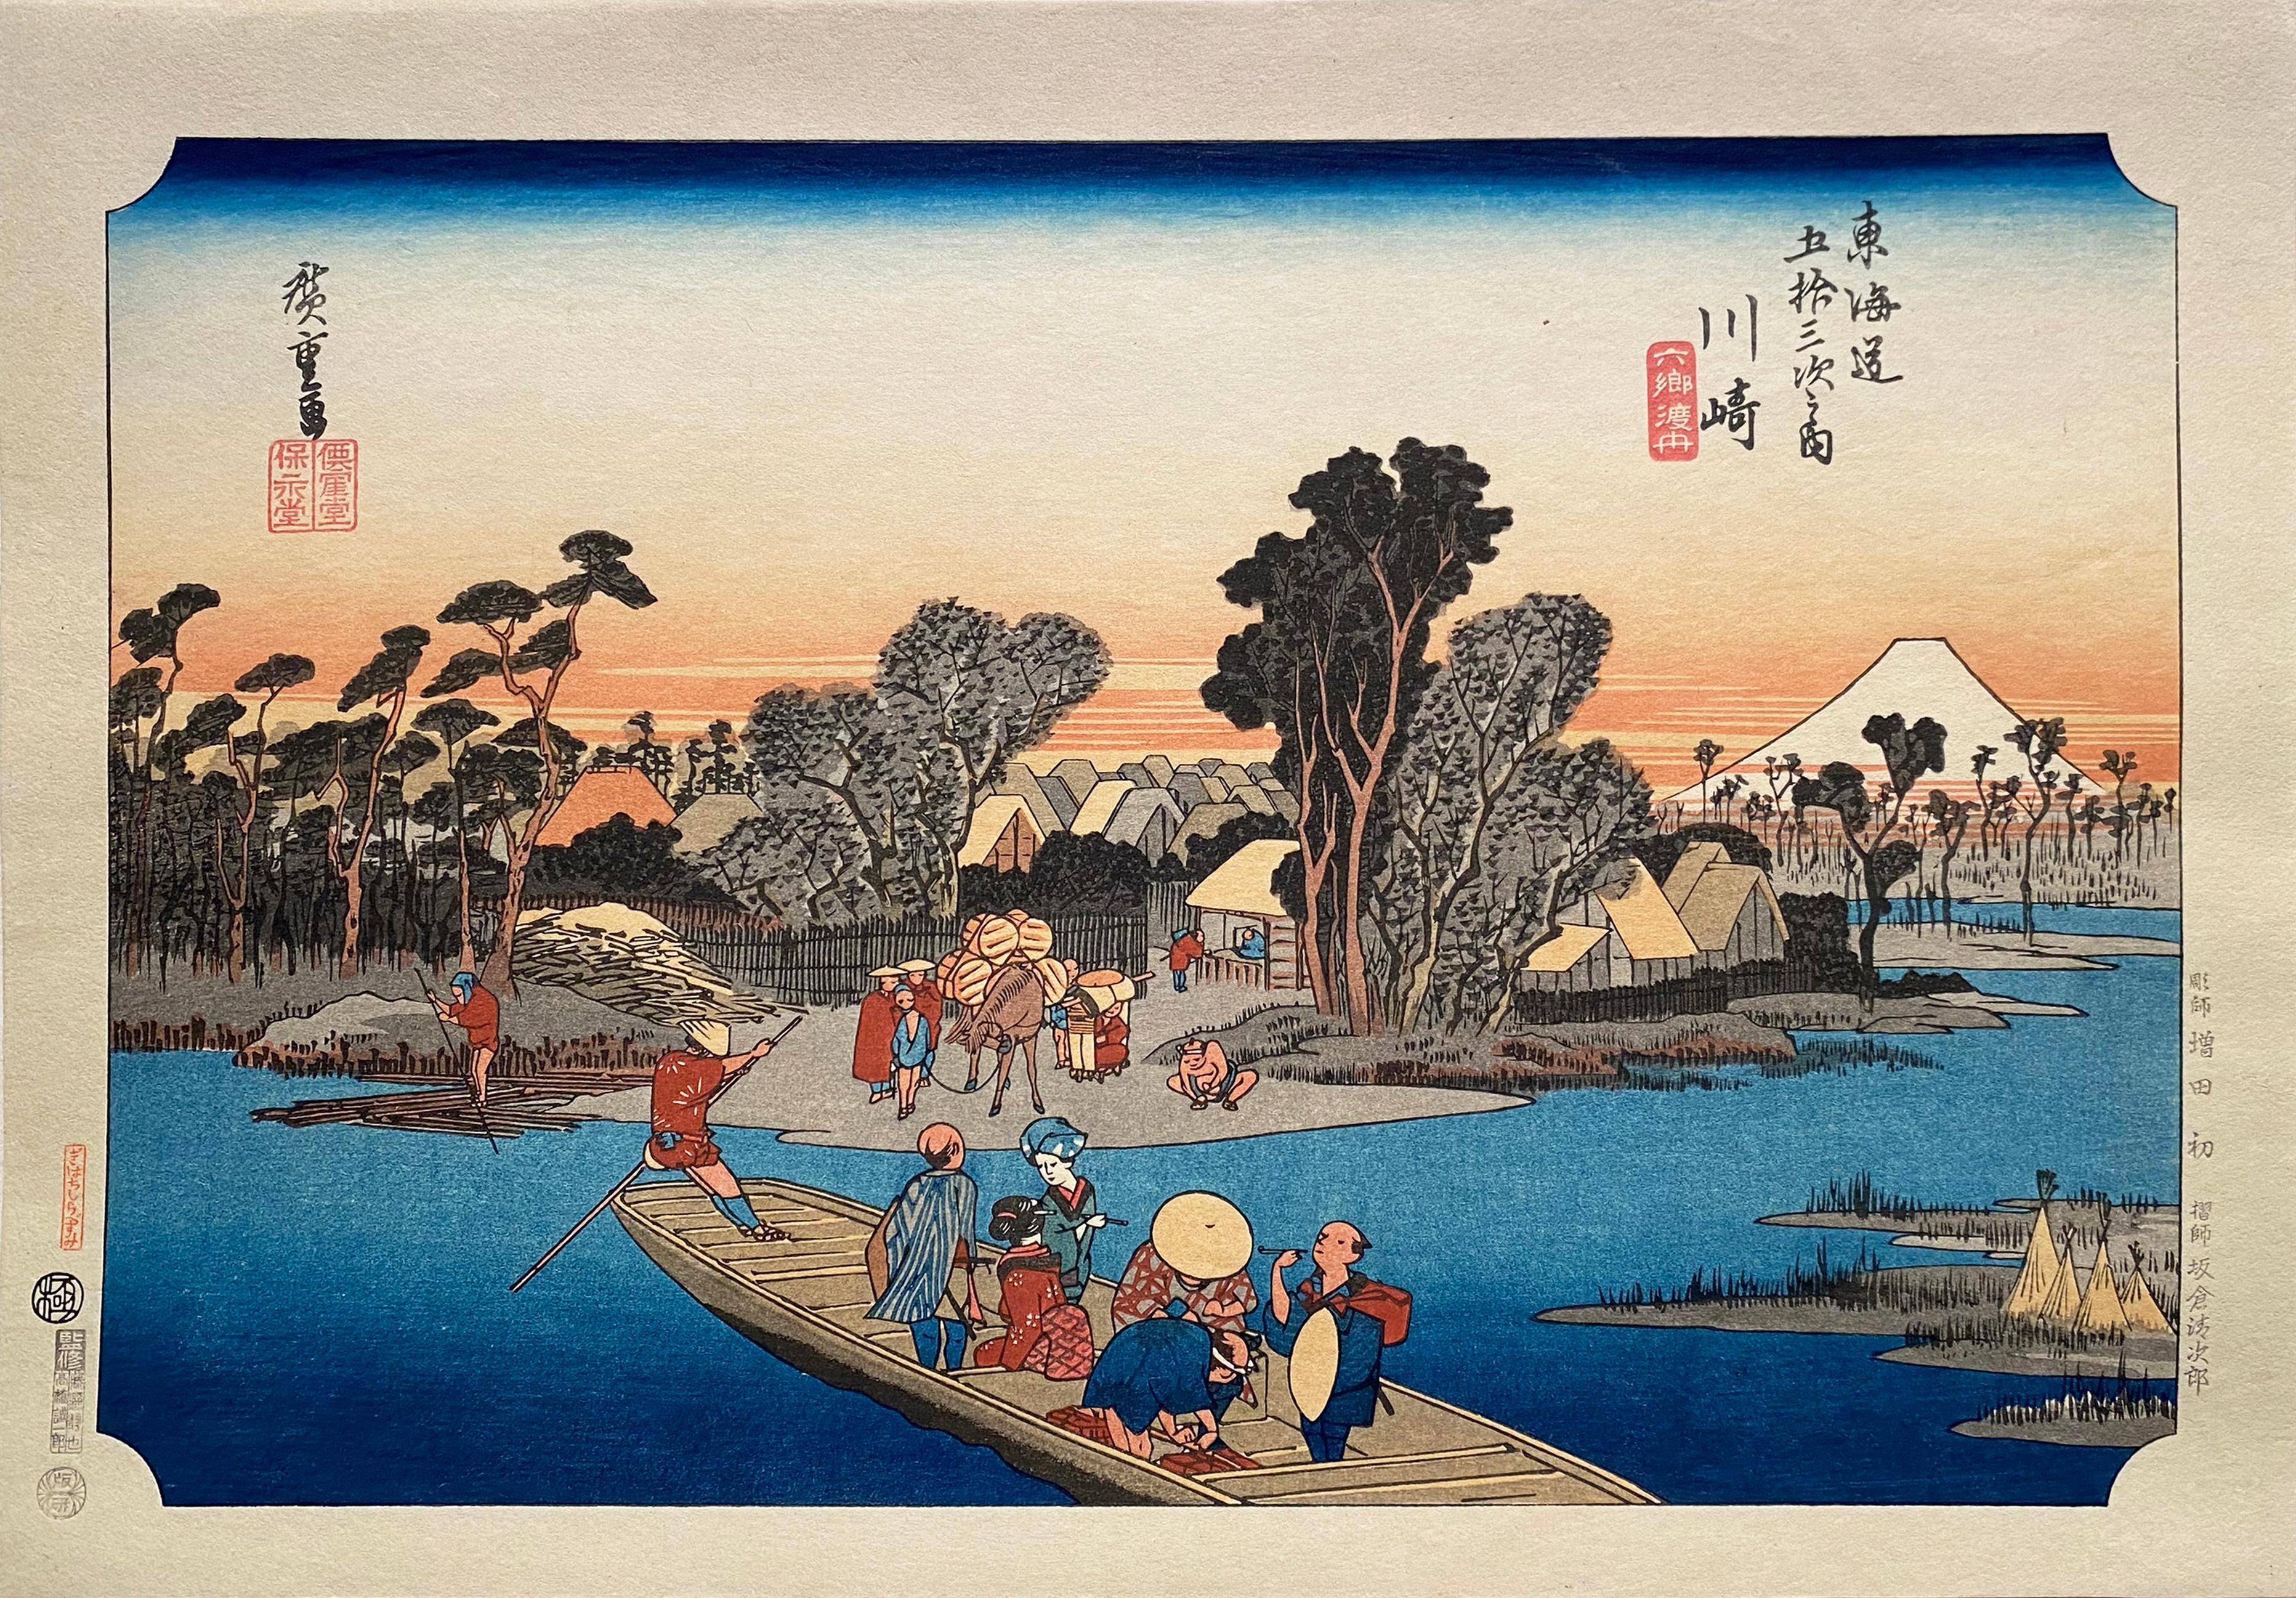 Utagawa Hiroshige (Ando Hiroshige) Landscape Print - 'A View of Kawasaki', After Utagawa Hiroshige 歌川廣重, Ukiyo-e Woodblock, Tokaido